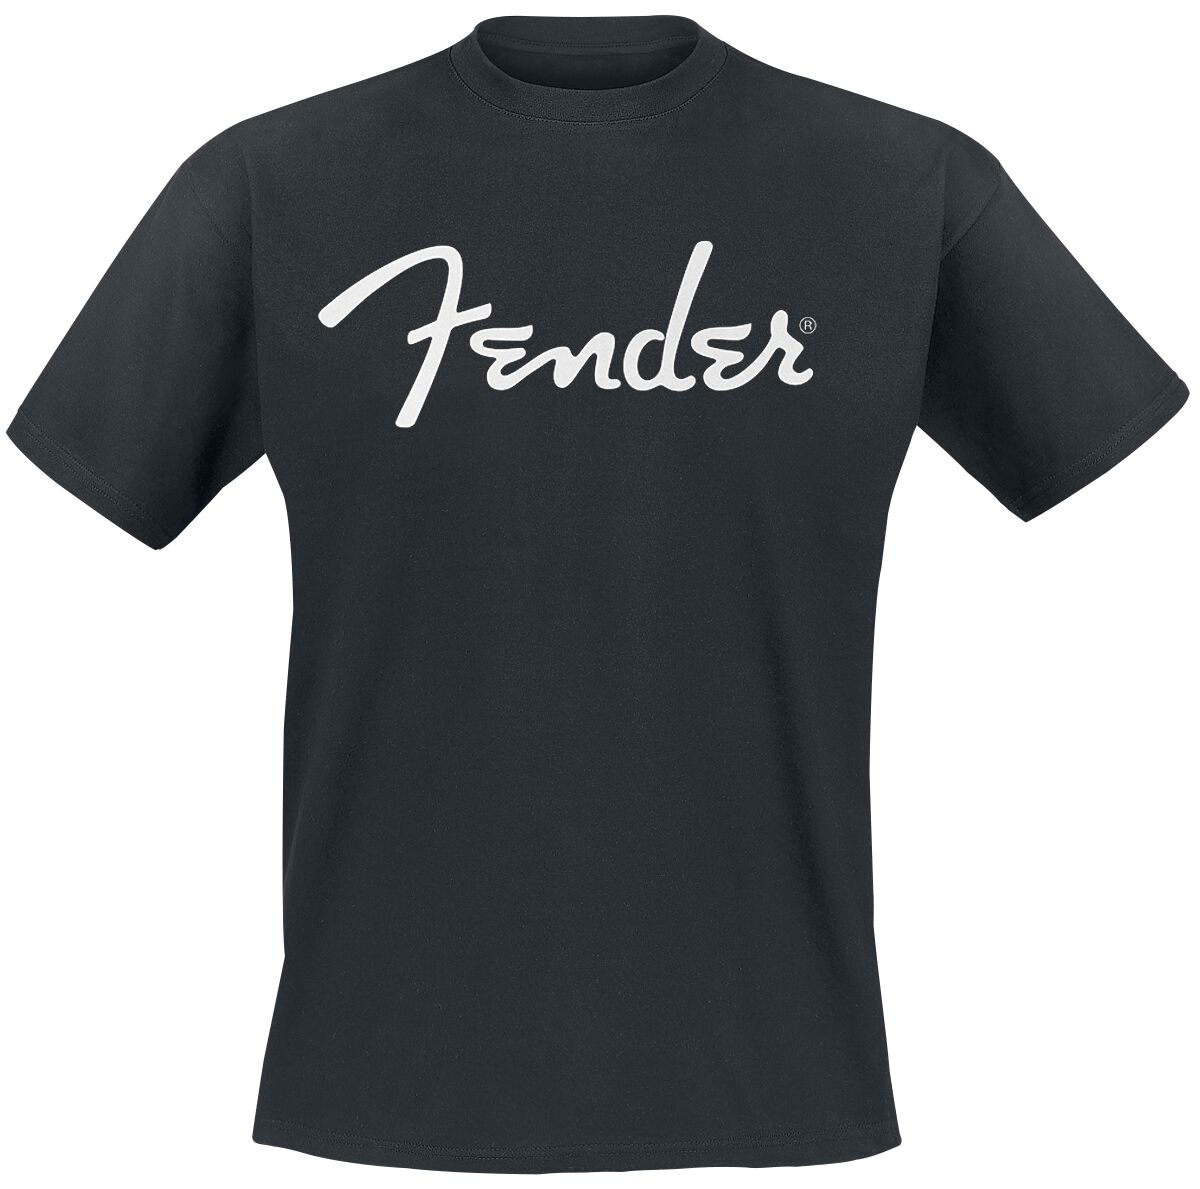 fender t-shirt - classic logo - s bis xxl - fÃ¼r mÃ¤nner - grÃ¶ÃŸe xxl - - lizenziertes merchandise! schwarz